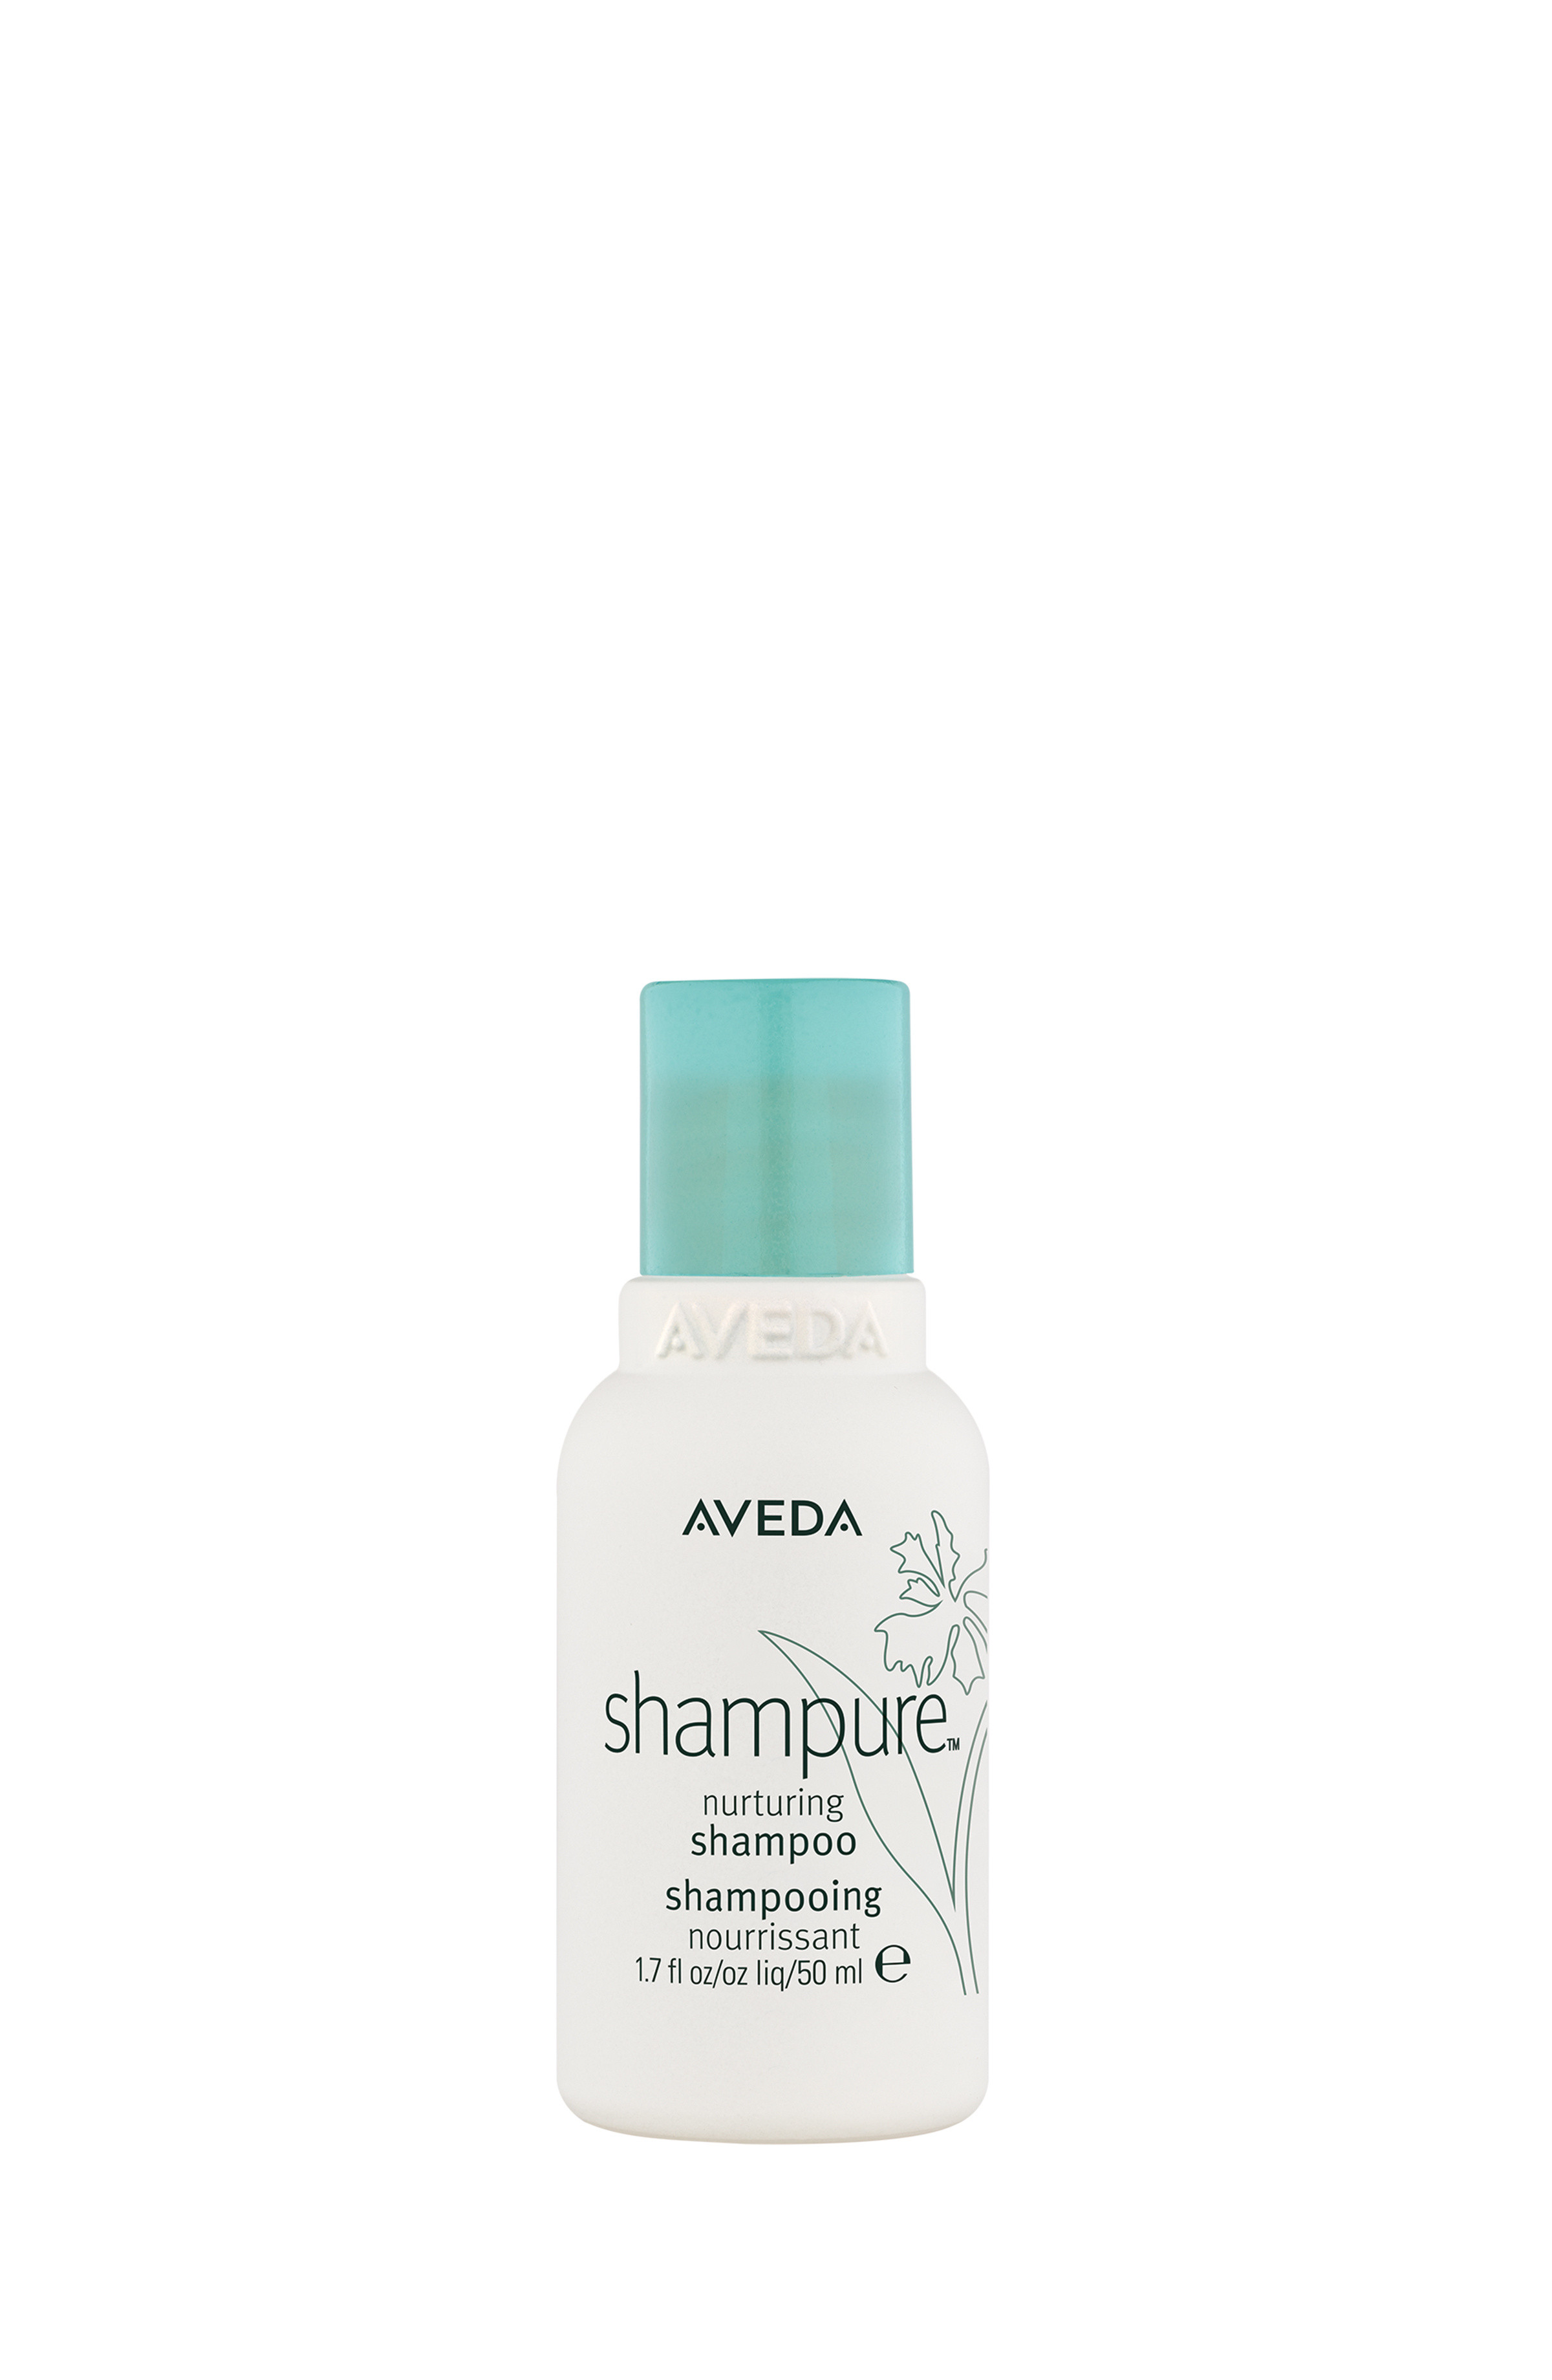 Aveda shampure nurturing shampoo 50 ml, White, large image number 0